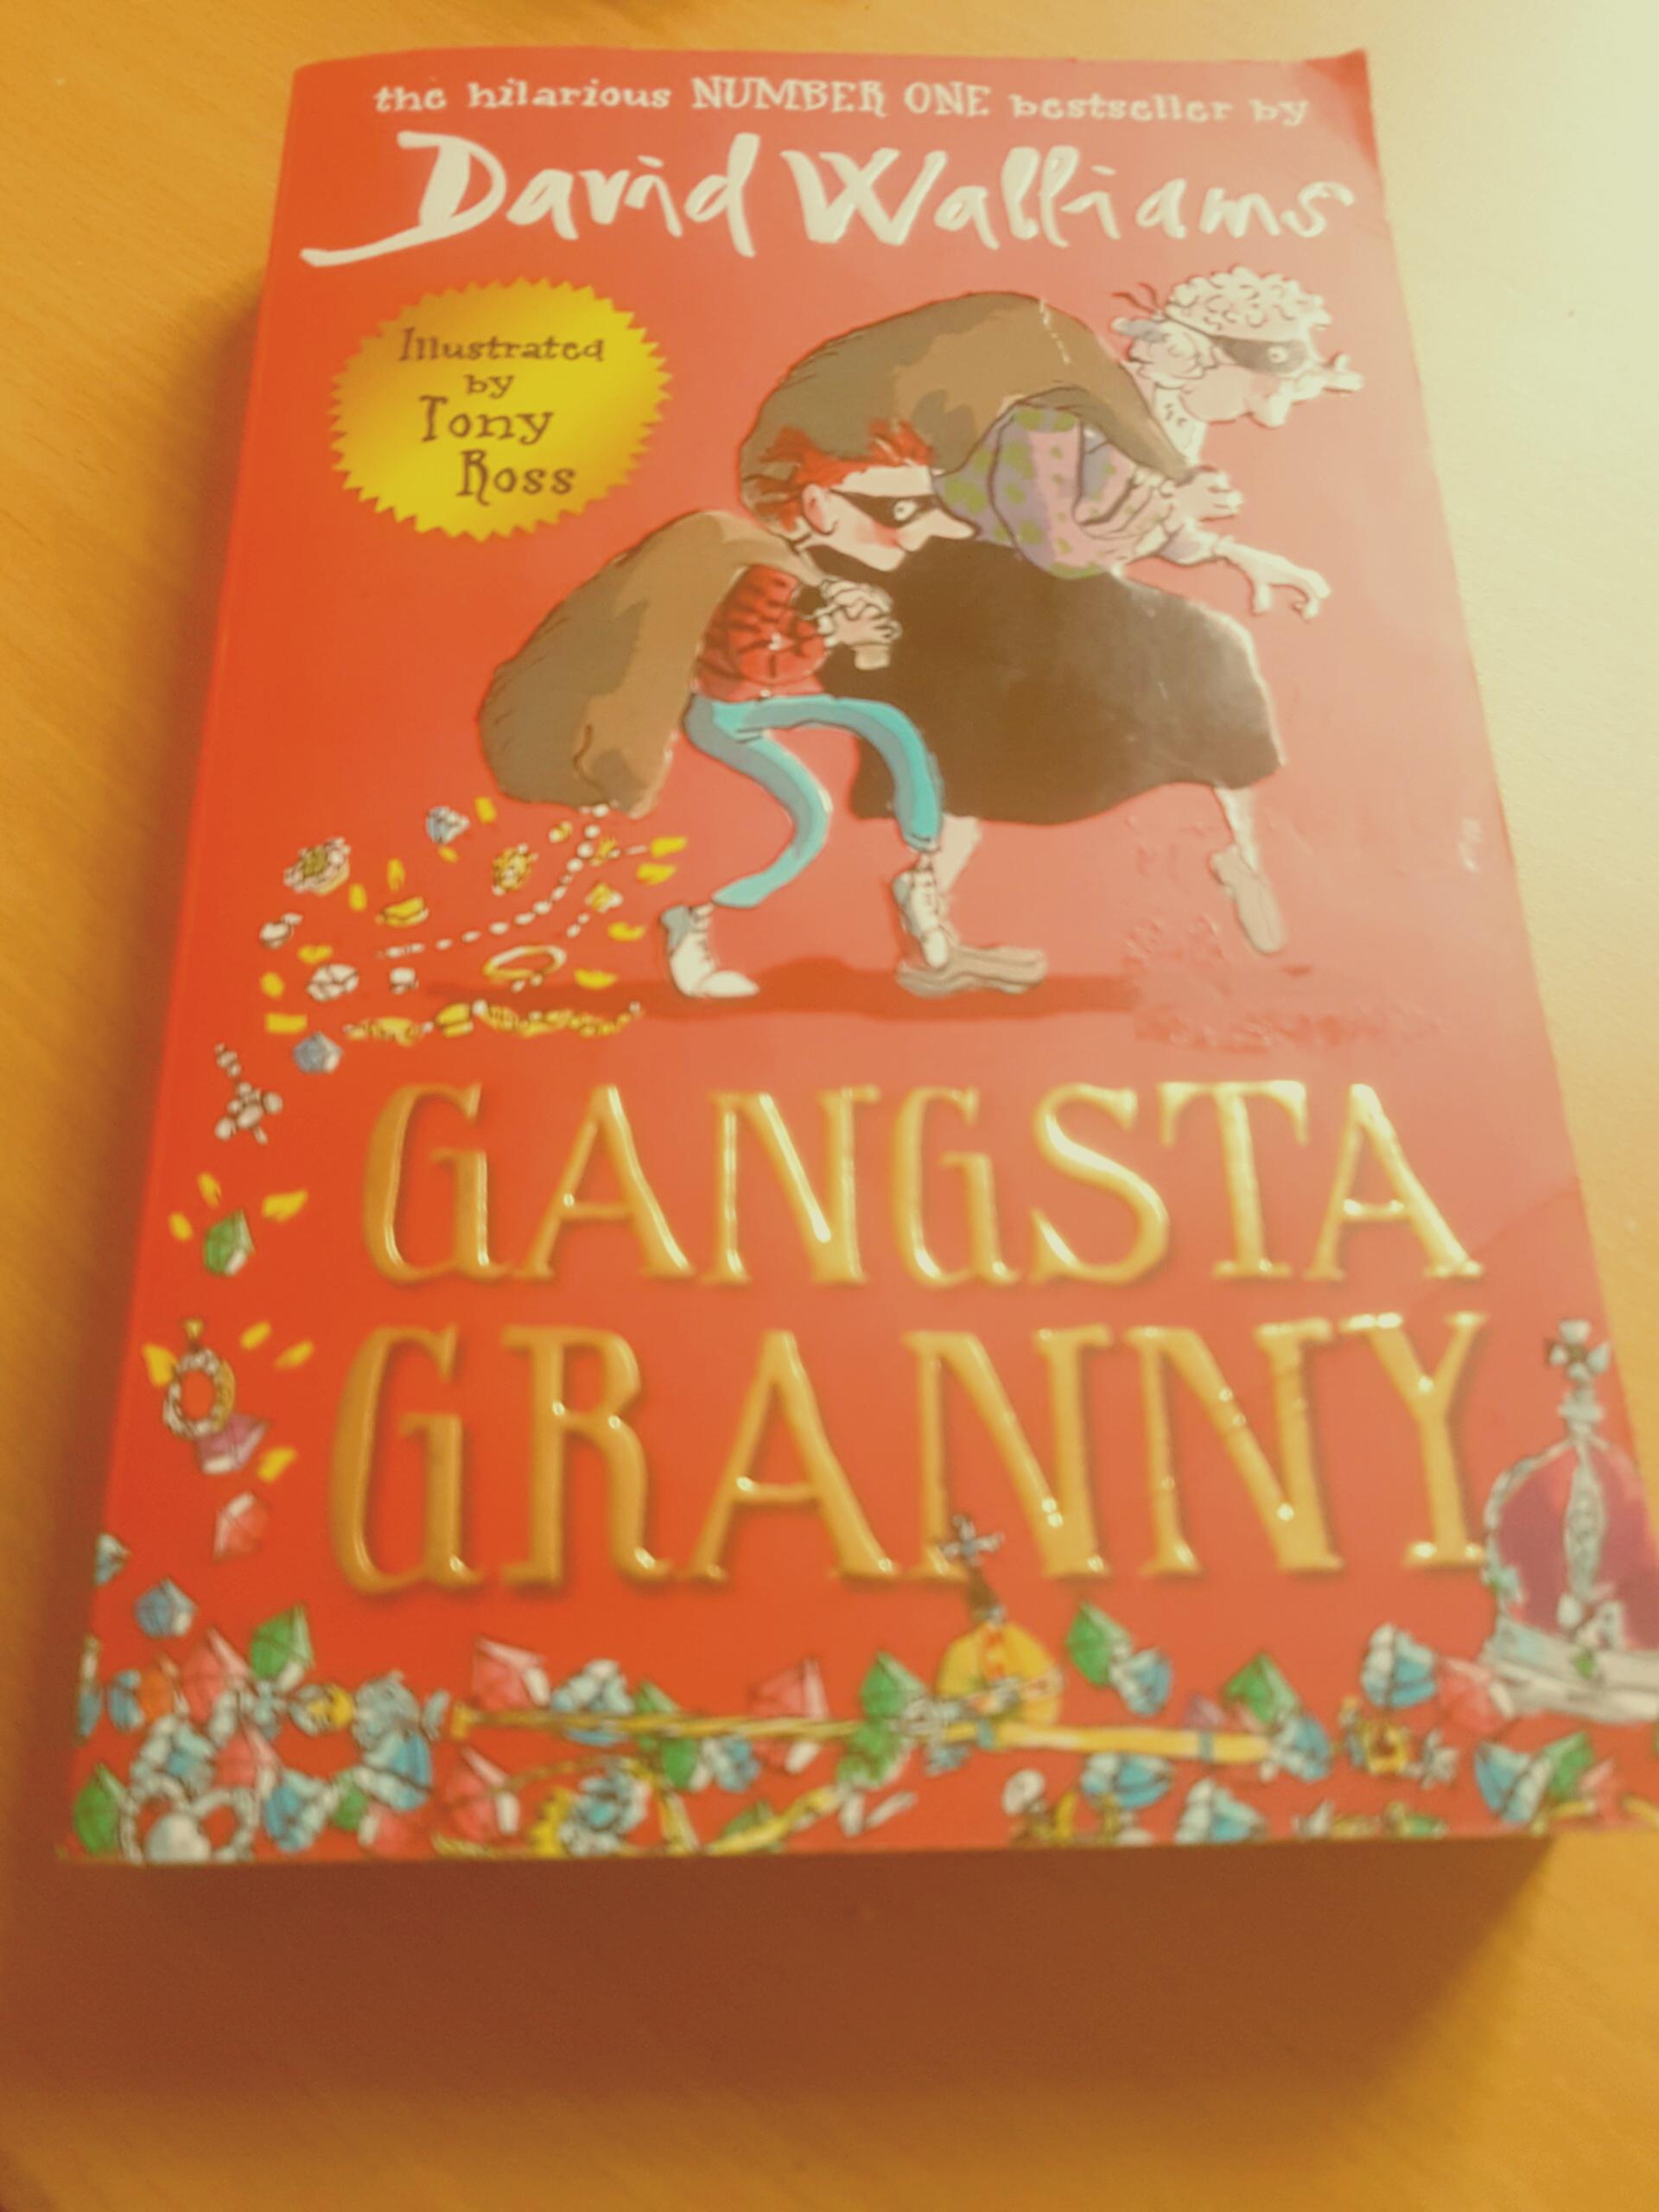 Bestseller David Walliams Gangsta Granny book £7.99 Save £2.99 on P&P ...